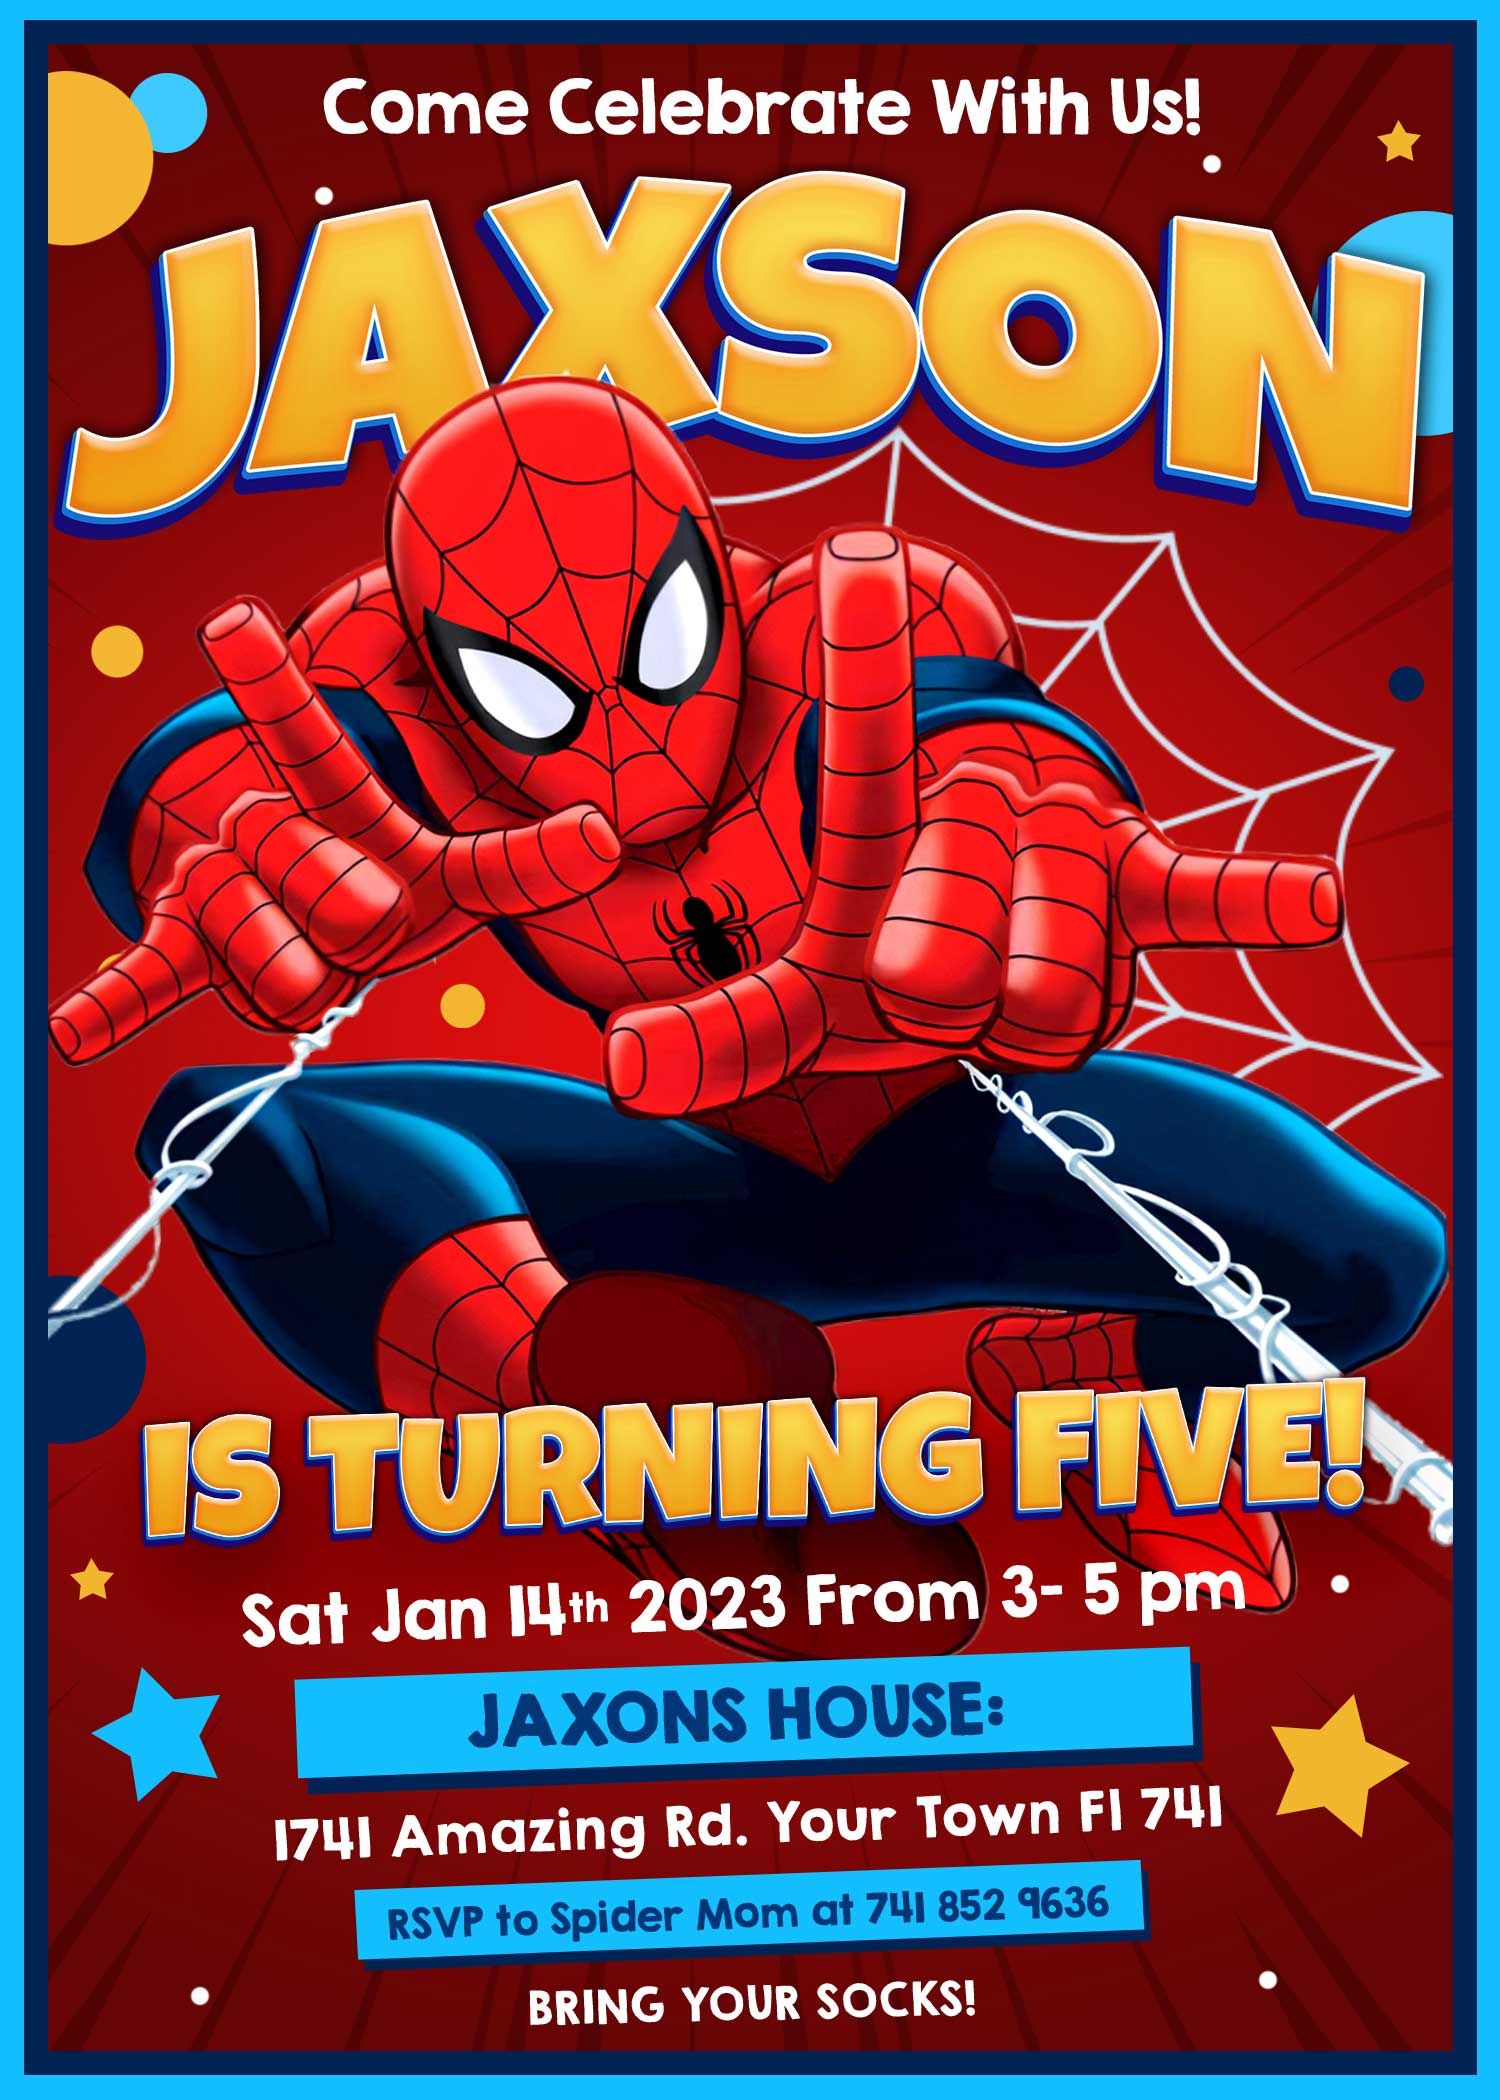 spiderman-invitation-card-spiderman-invite-spiderman-birthday-party